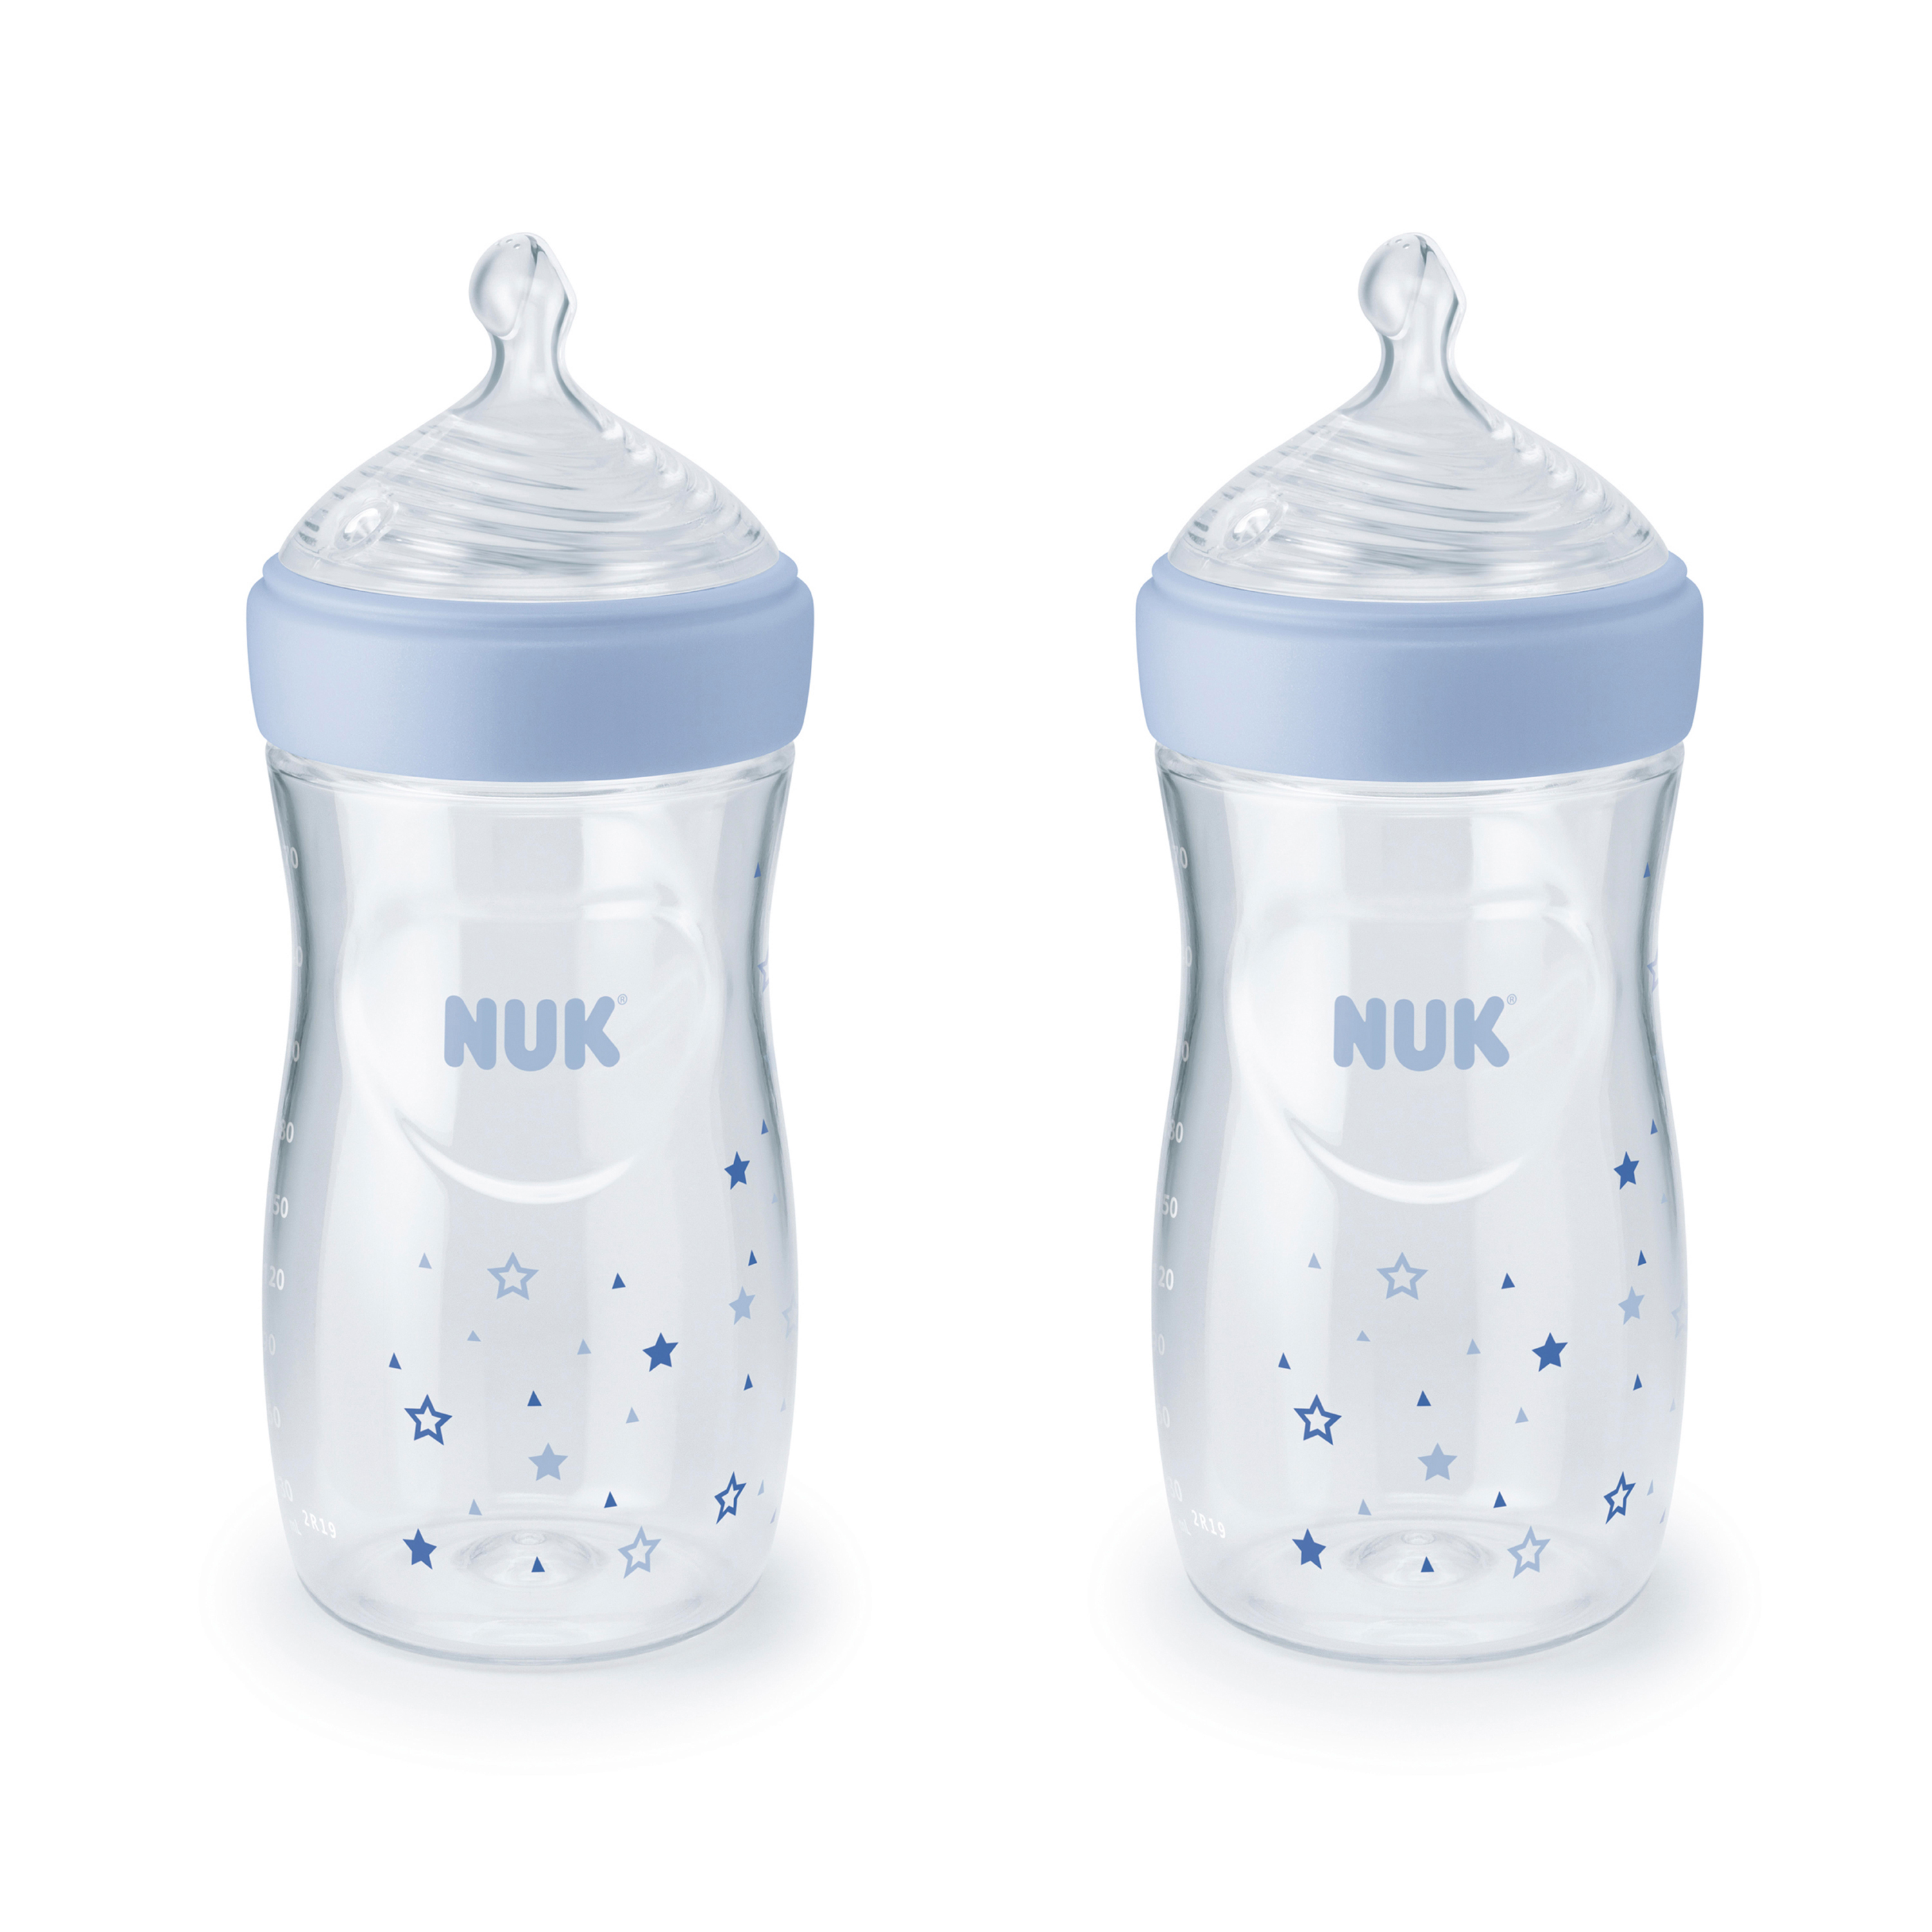 NUK Simply Natural Baby Bottles, 9 oz, 2-Pack, Boy - image 1 of 6